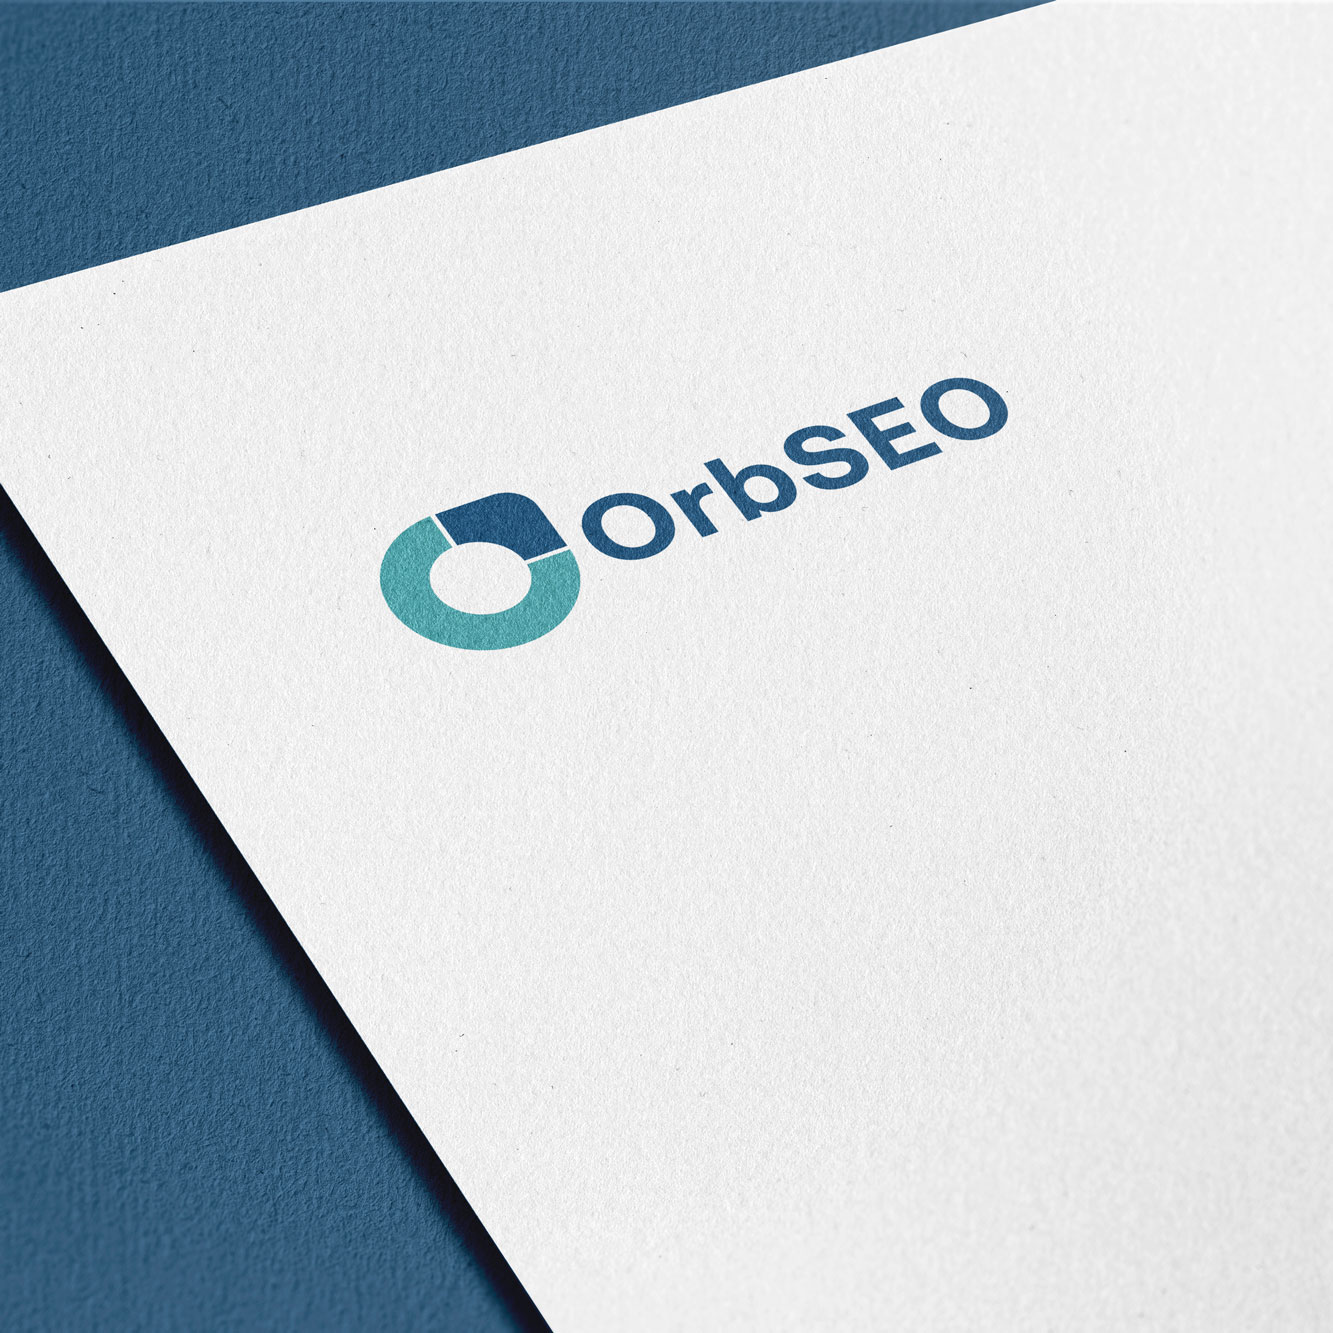 SEO company Logo preview image.